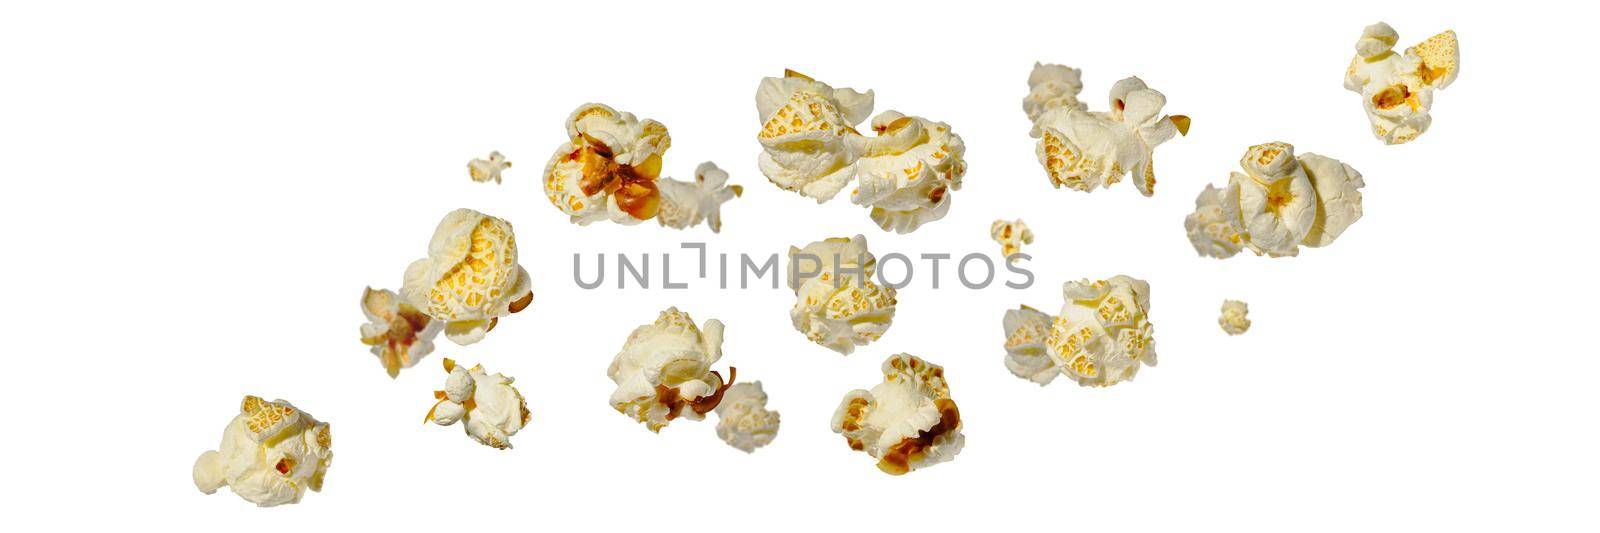 Falling popcorn, isolated on white background by PhotoTime